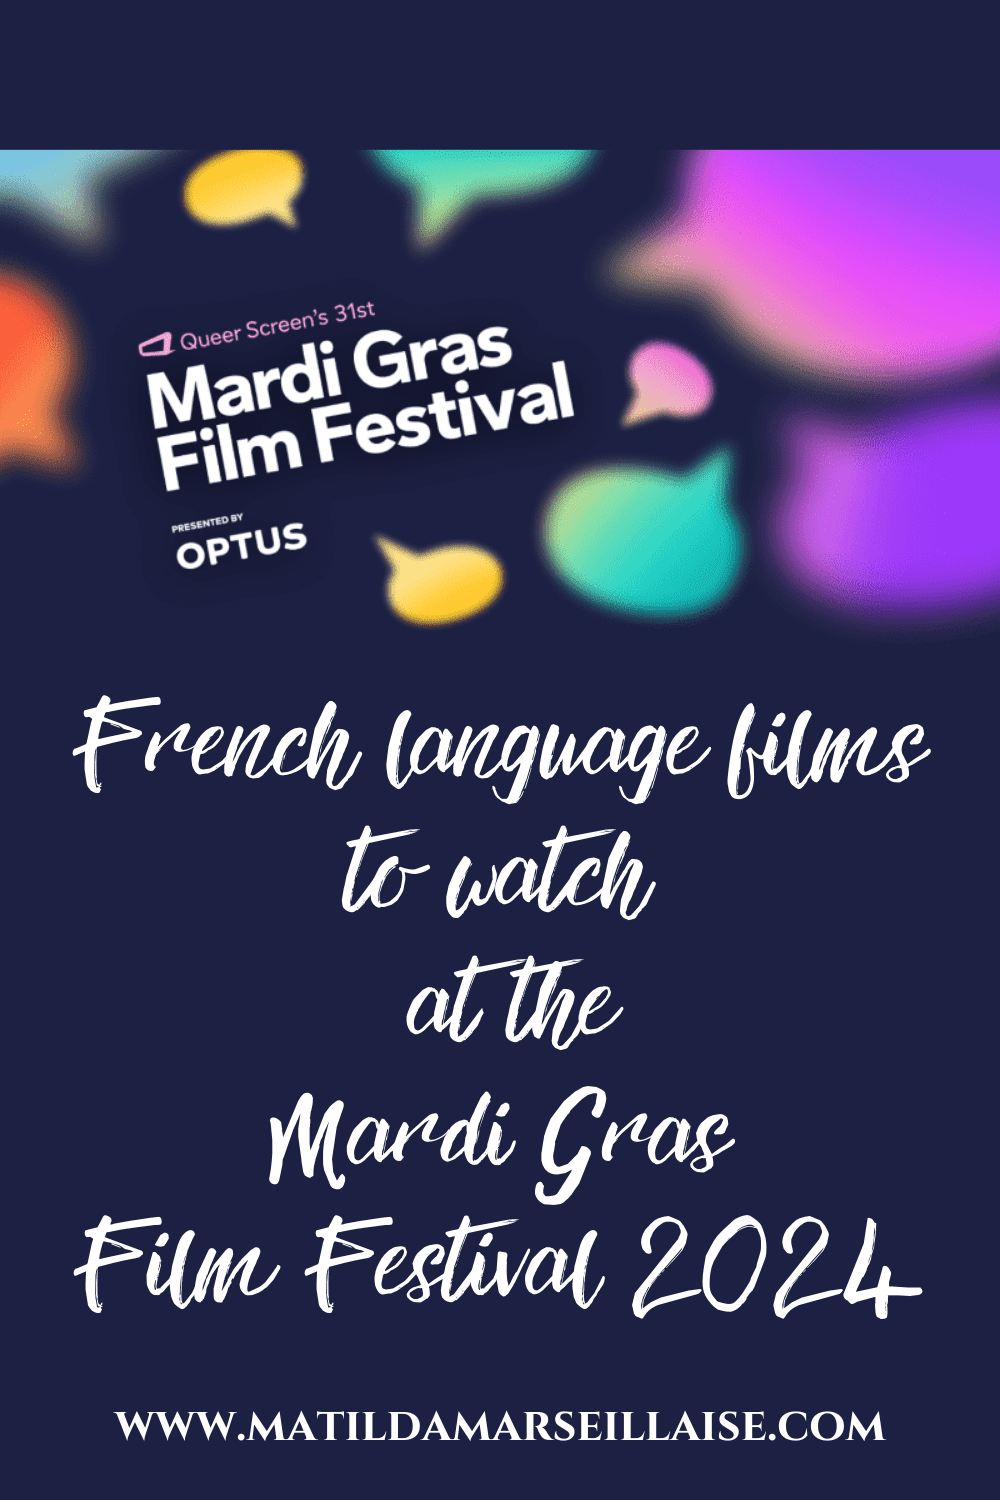 Mardi Gras Film Festival 2024